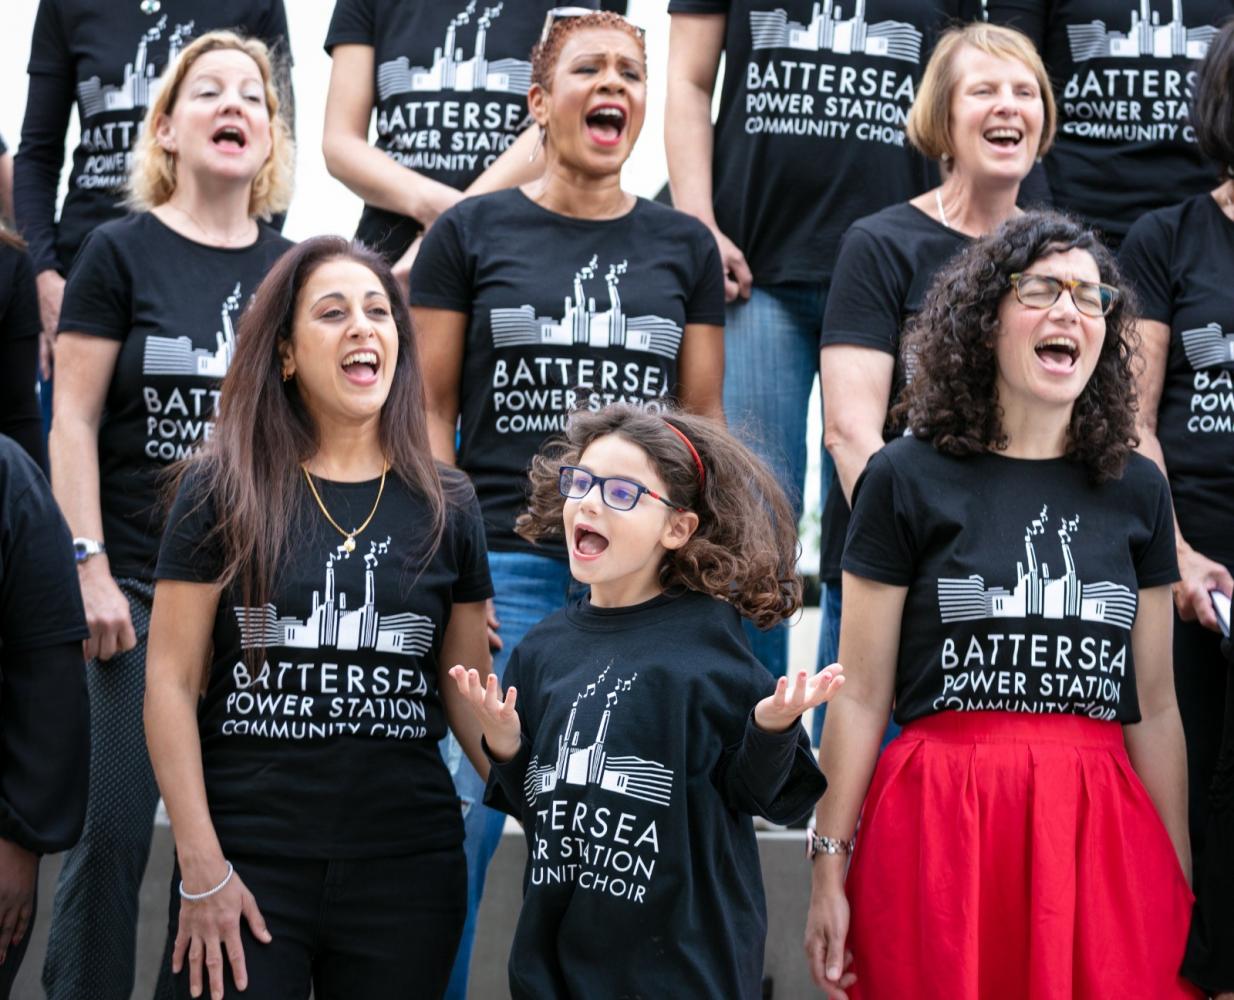 Battersea Power Station Community Choir singing